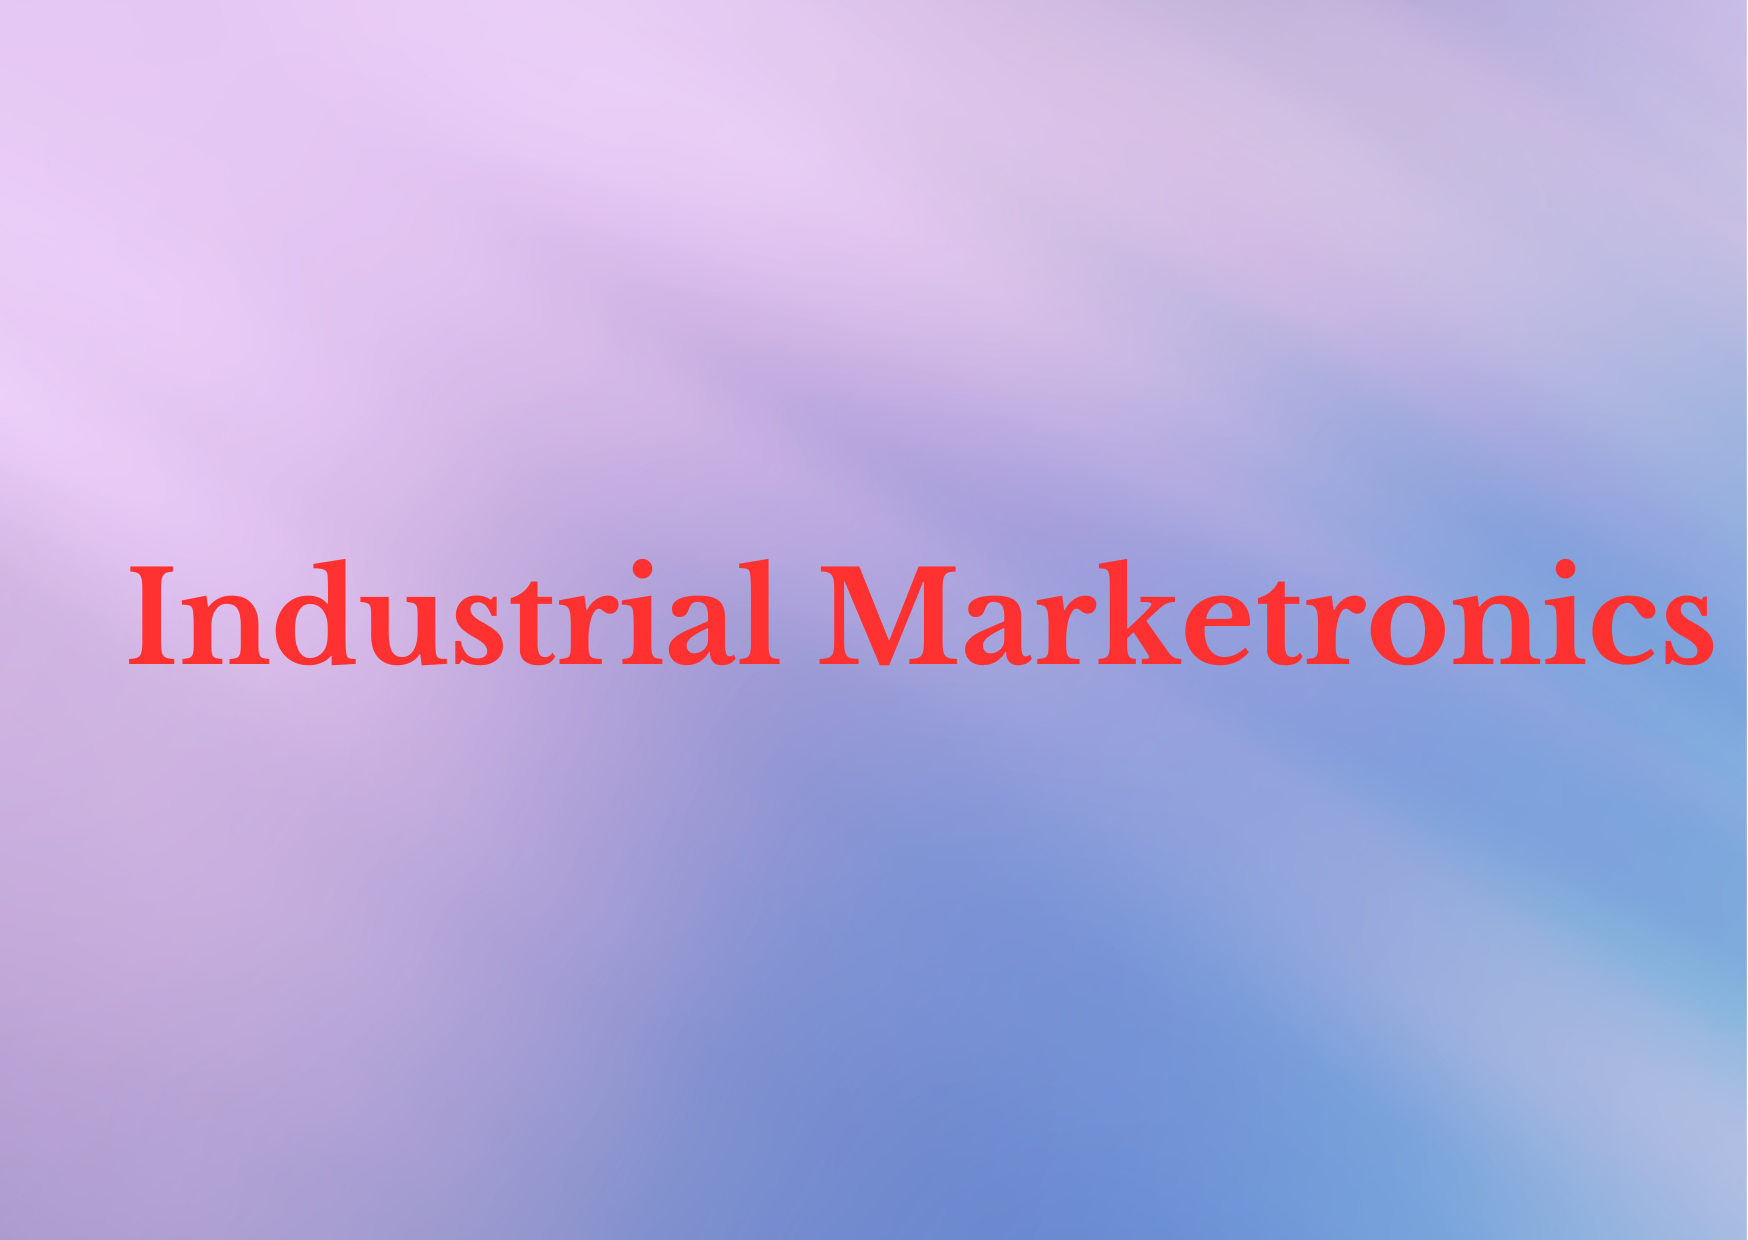 Industrial Marketronics 